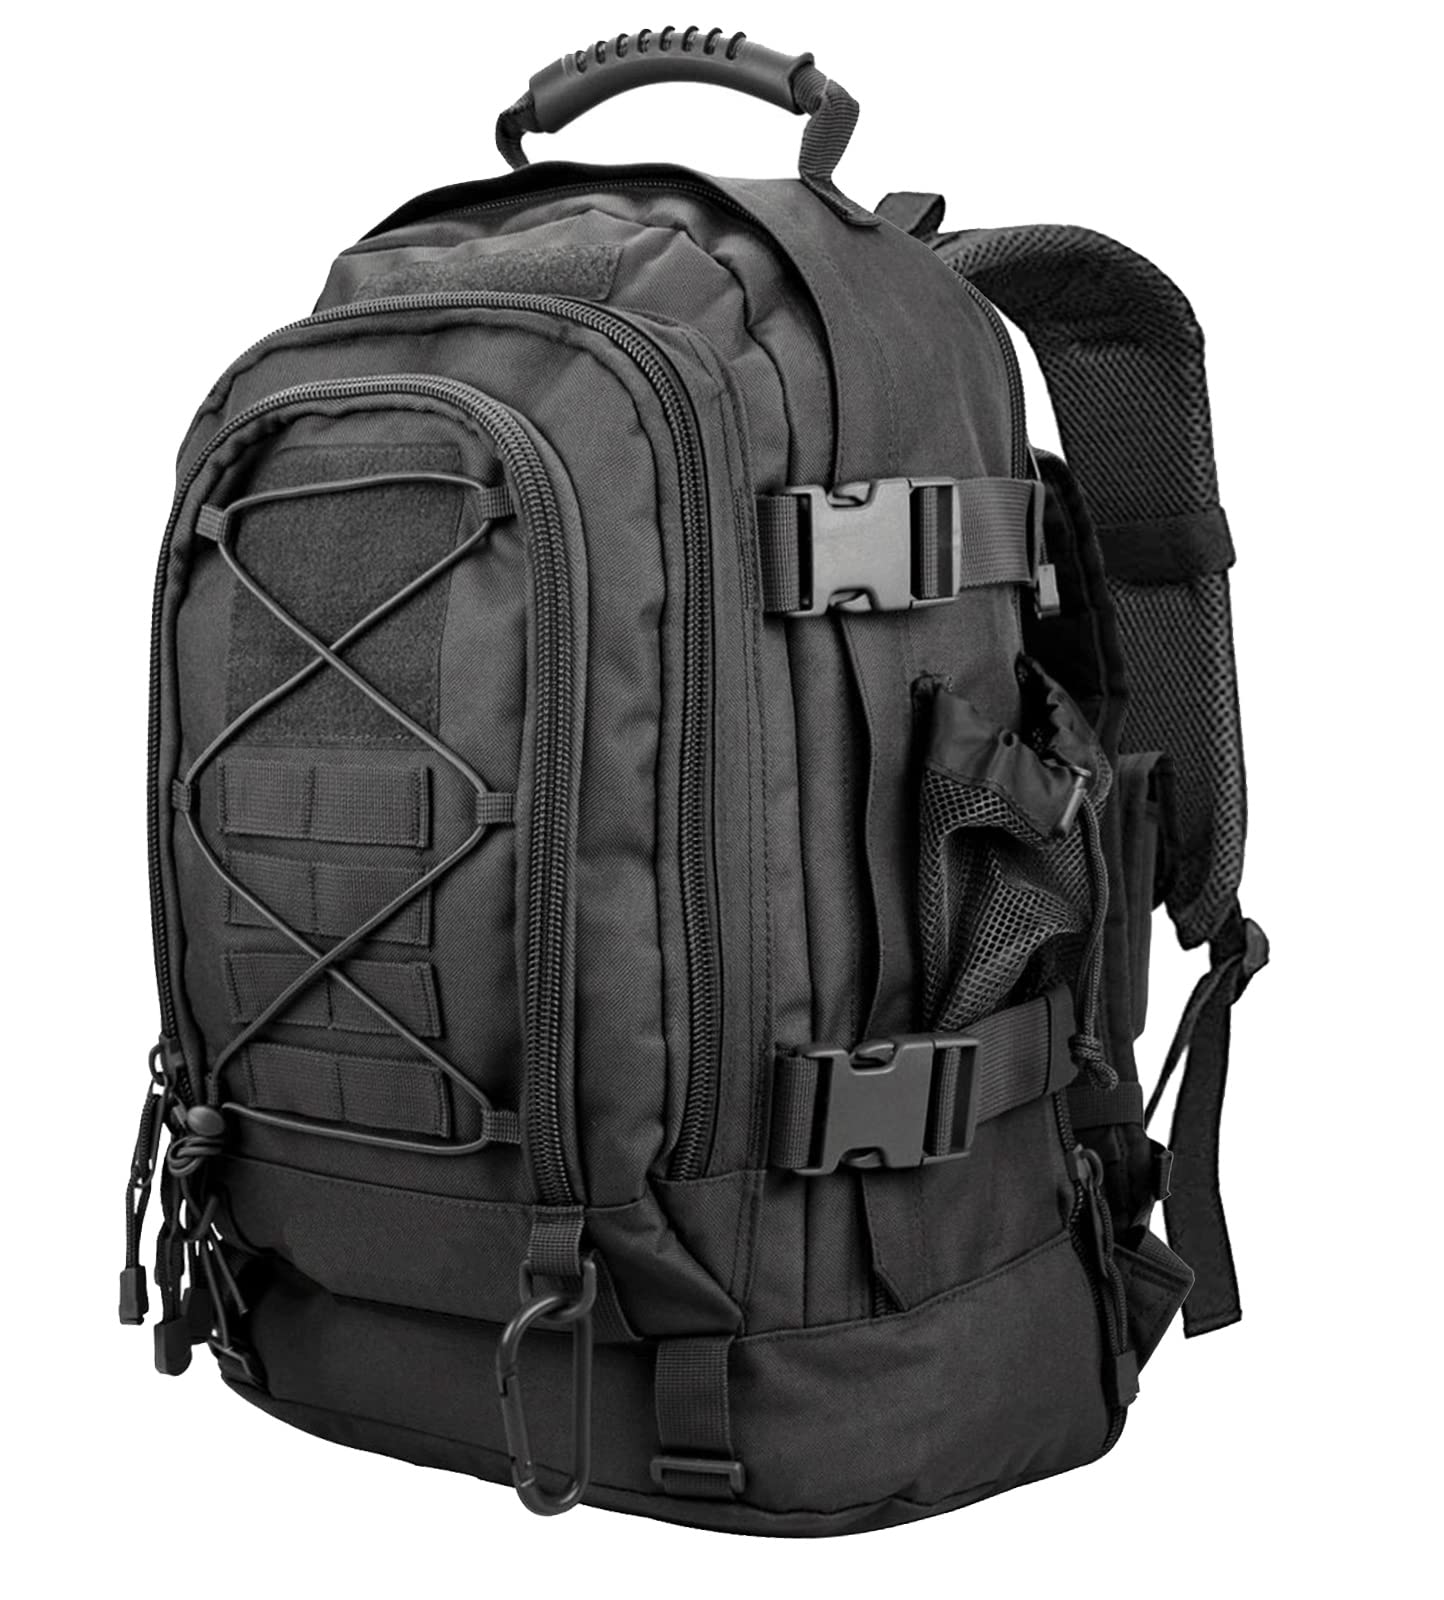 Unisex adjustable belt chest strap waterproof tactical backpack